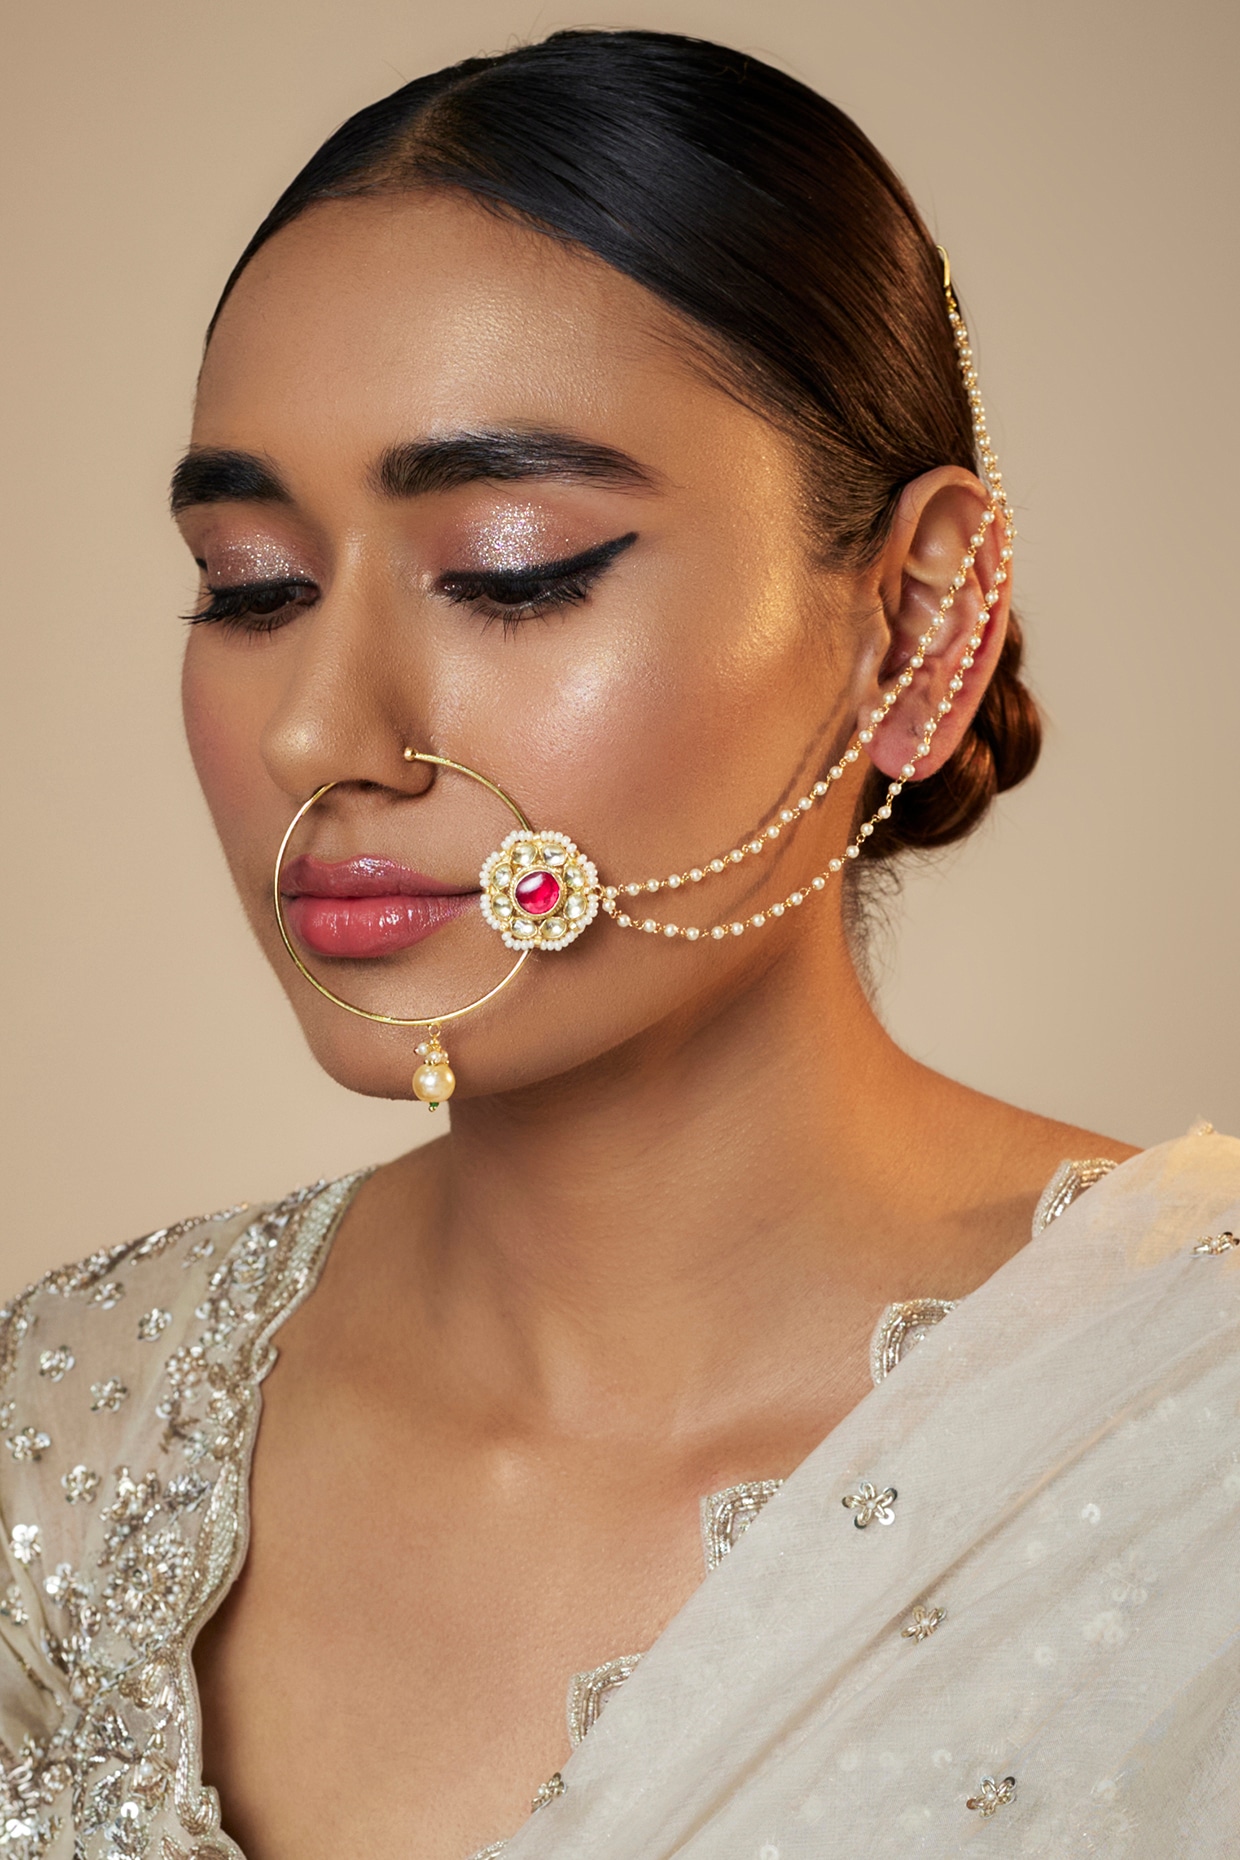 Trending Gold Nose Ring Designs for Your Big Day! | Bridal makeup images, Nose  ring designs, Bride